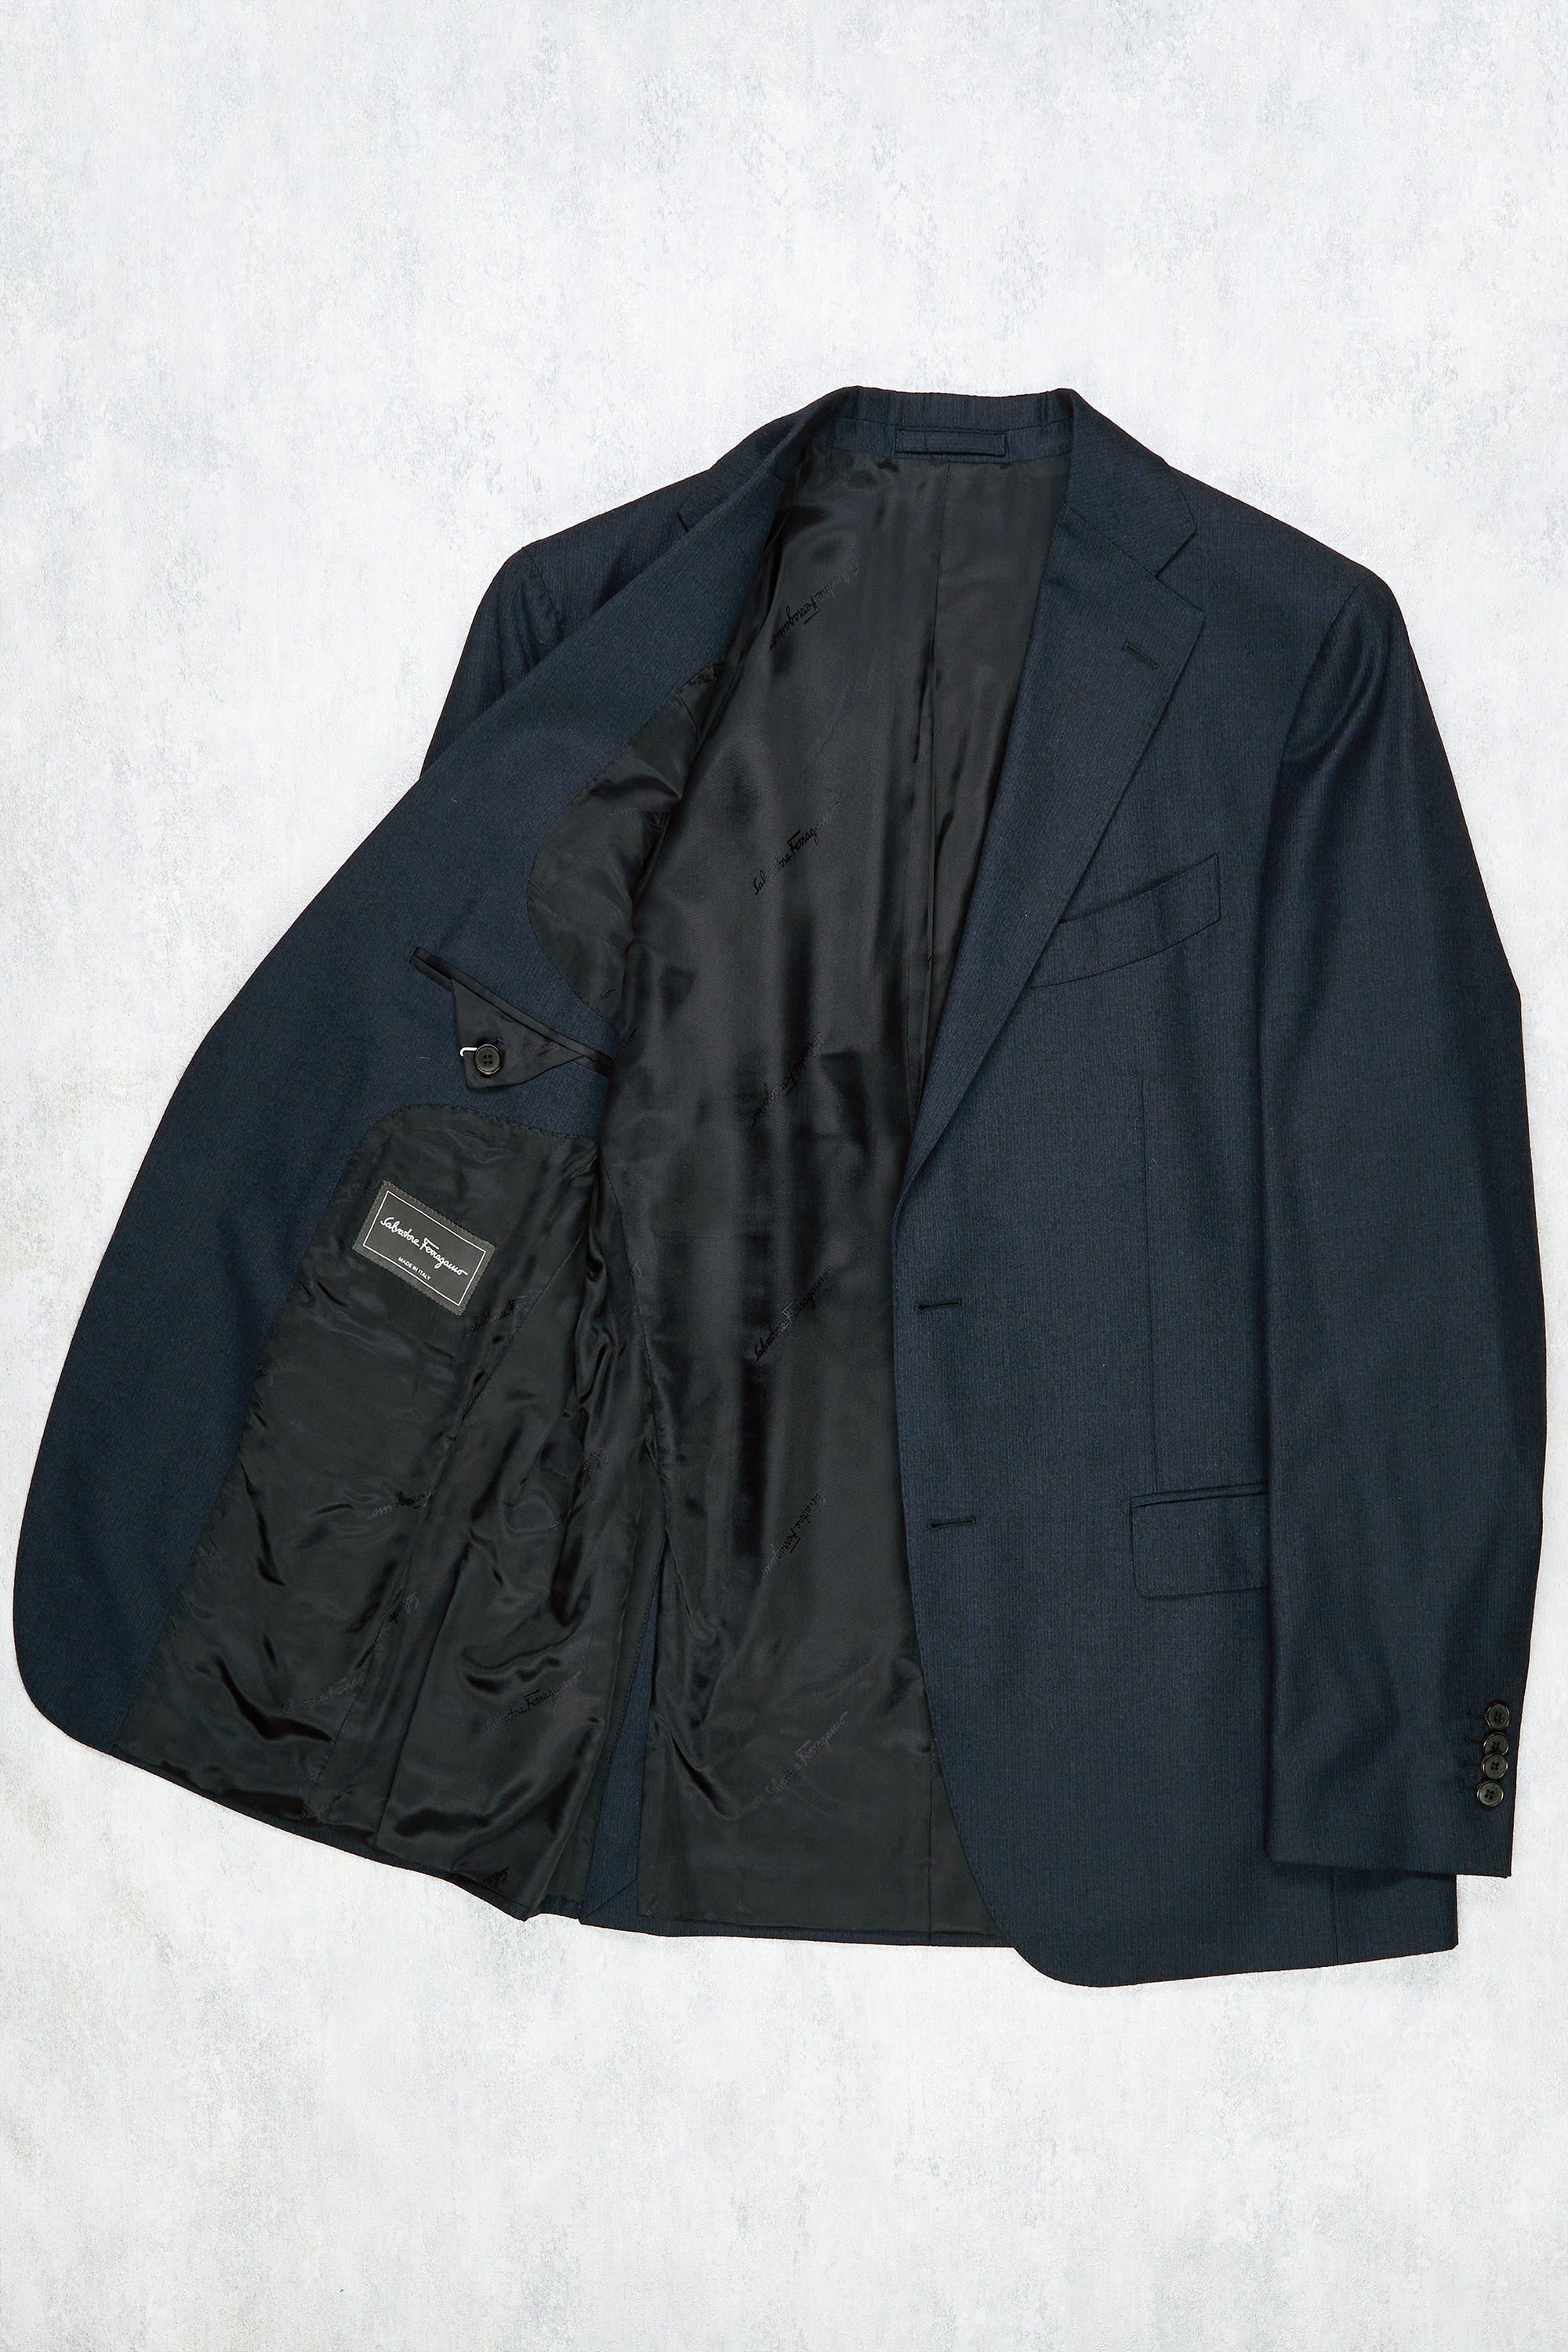 Salvatore Ferragamo Navy Stripe Wool/Cashmere Suit